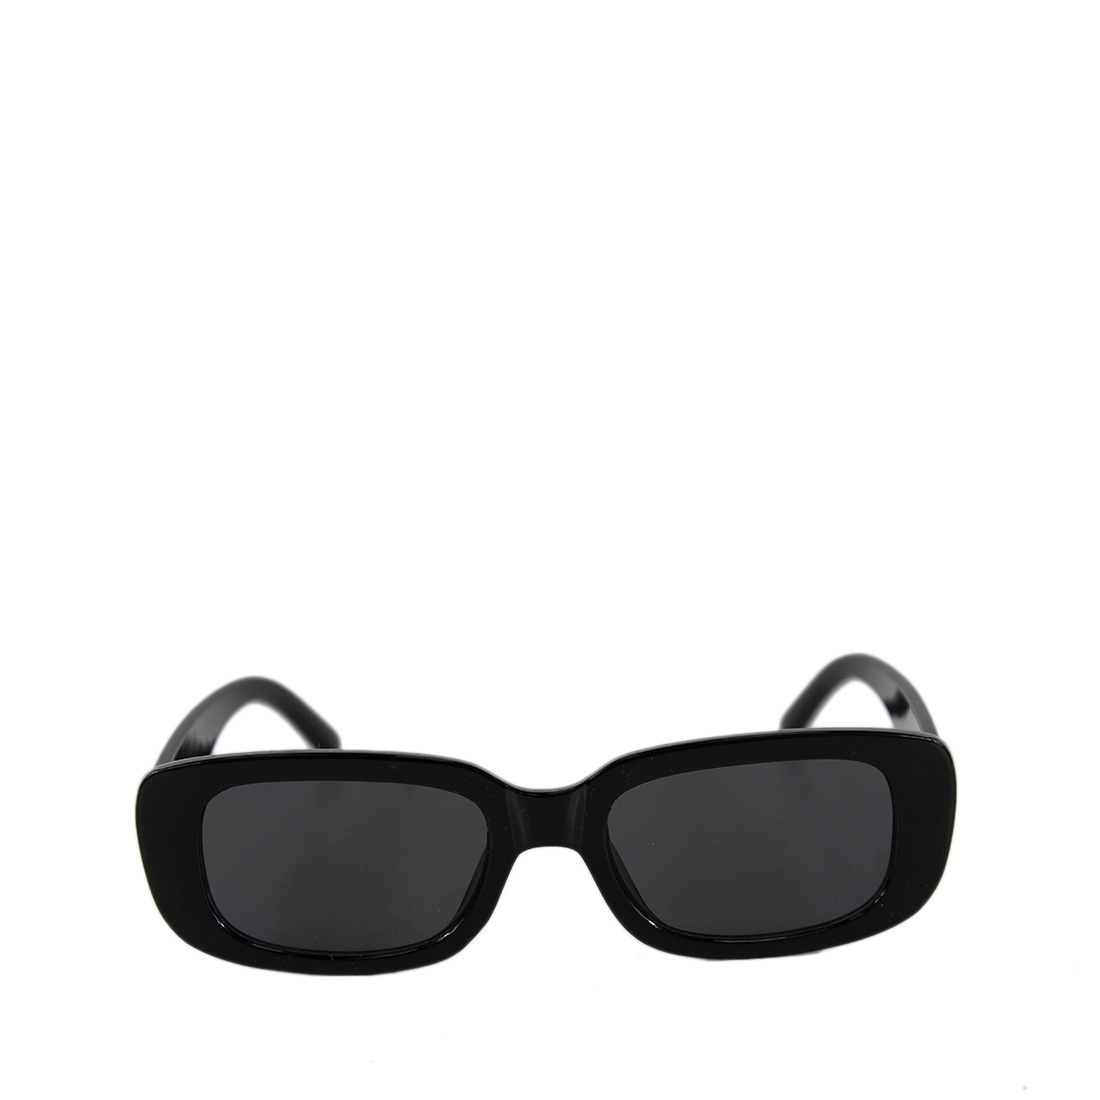 Mid square sunglasses in tort